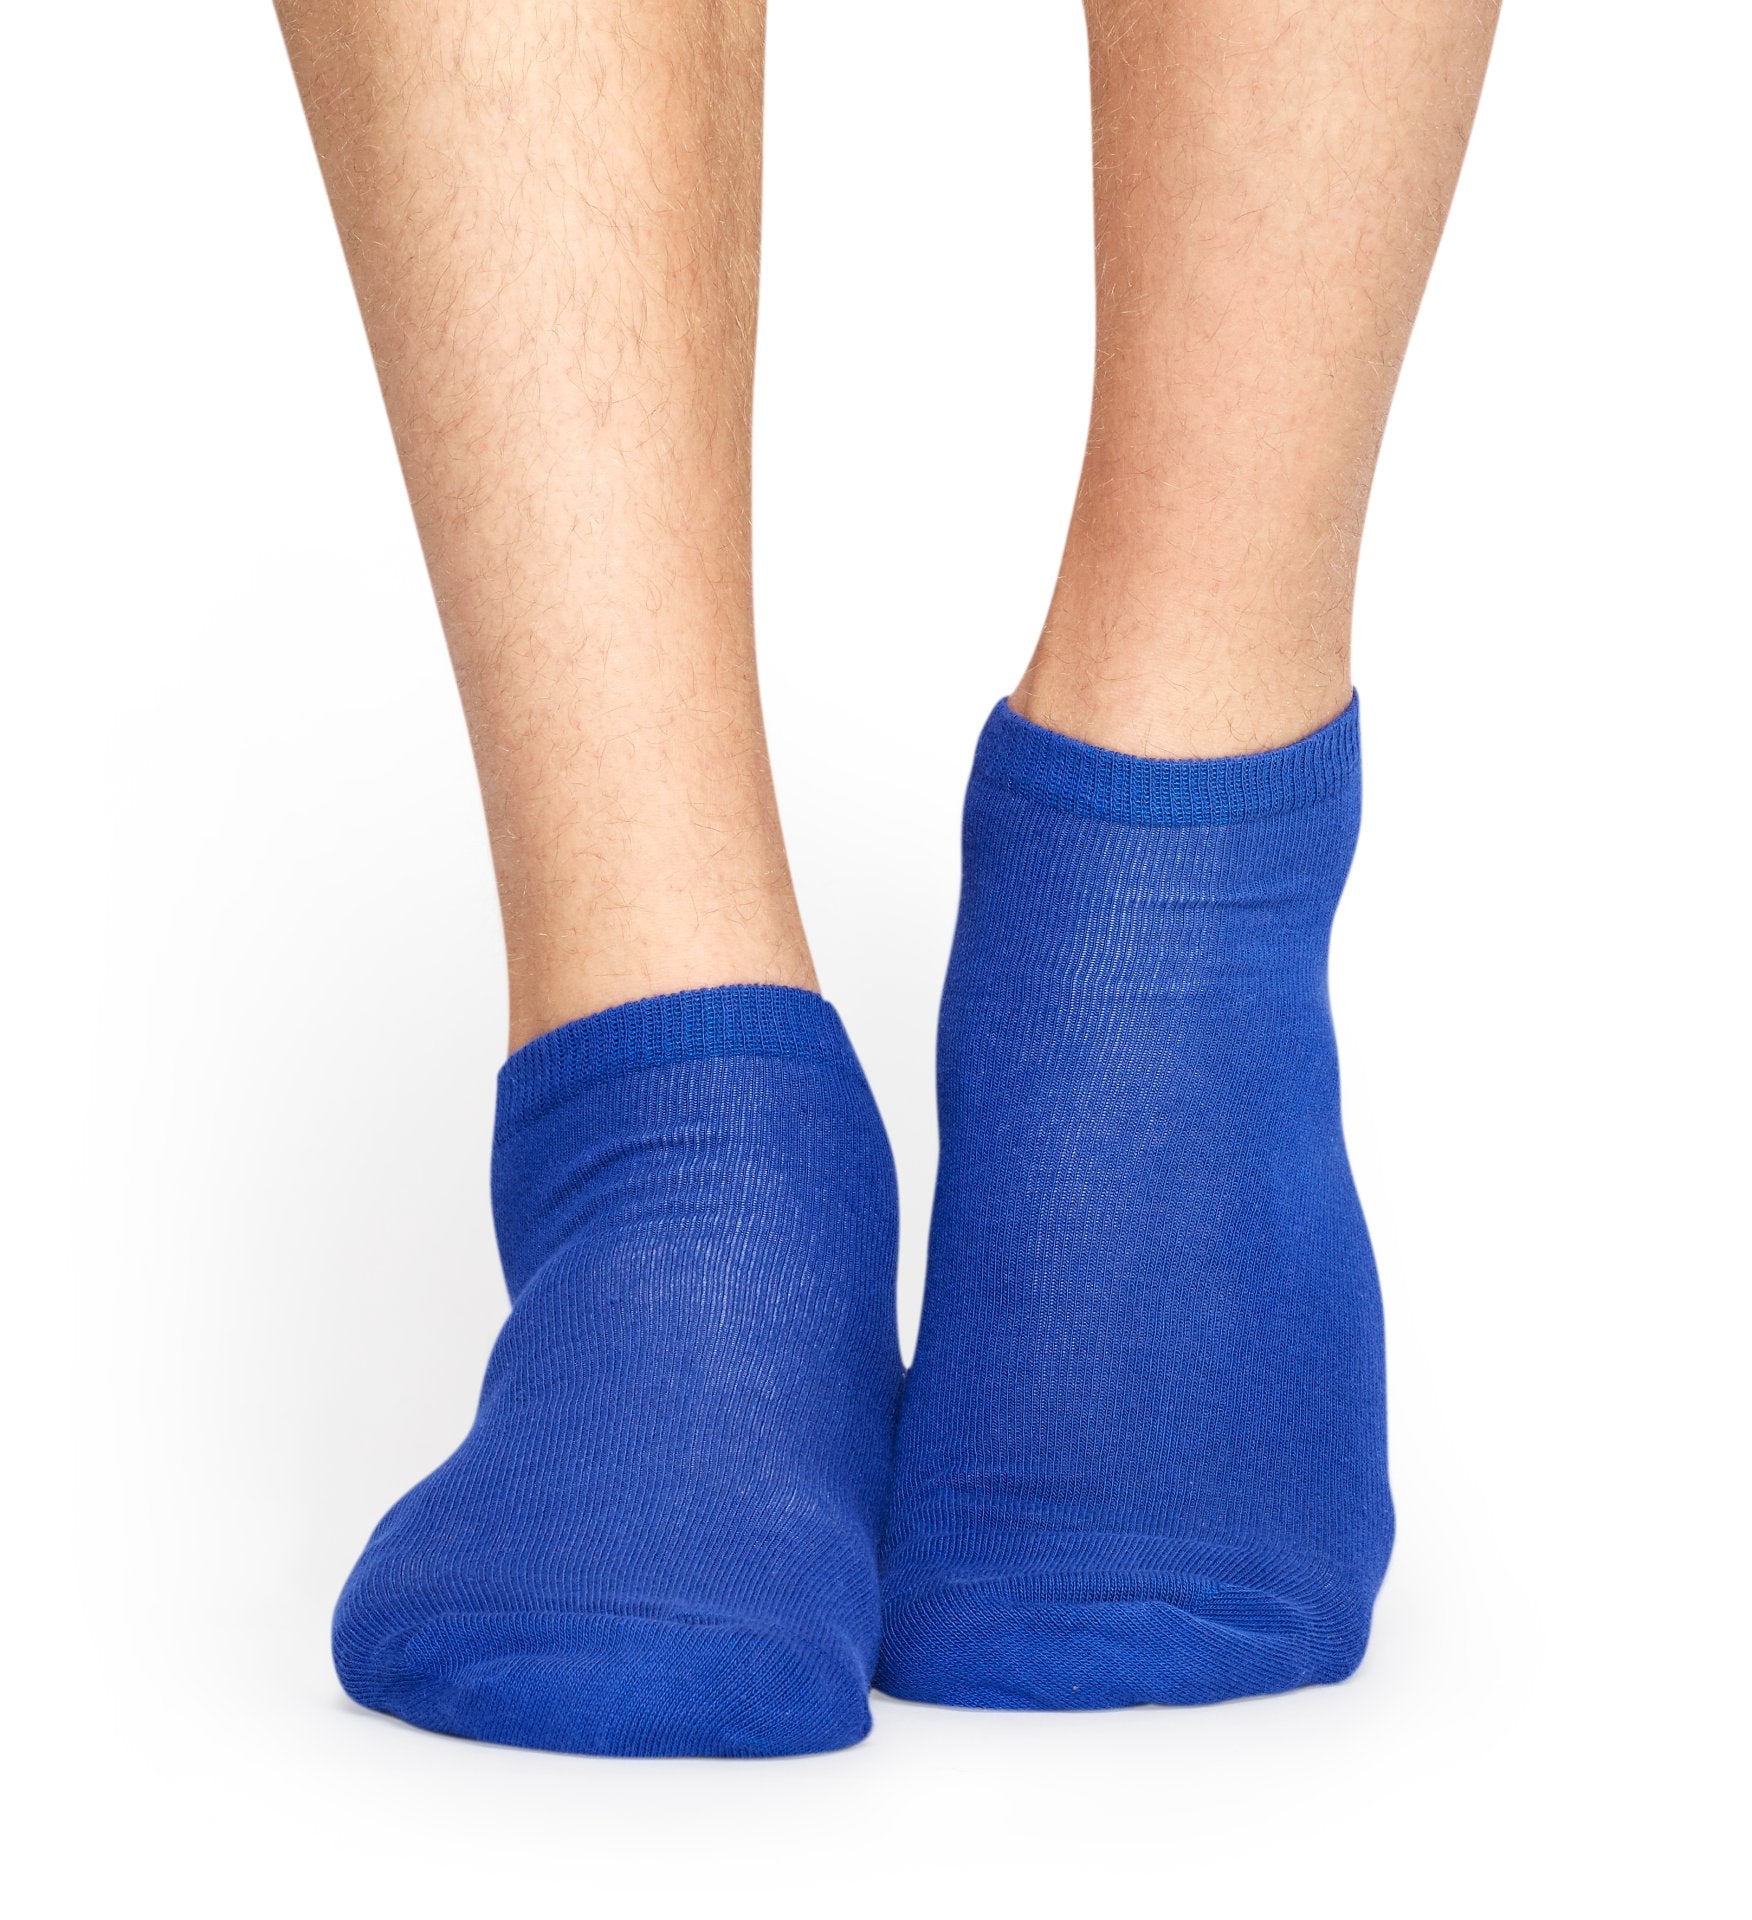 Nízké ponožky Happy Socks, vzor Hamburger (modré) - 2 páry